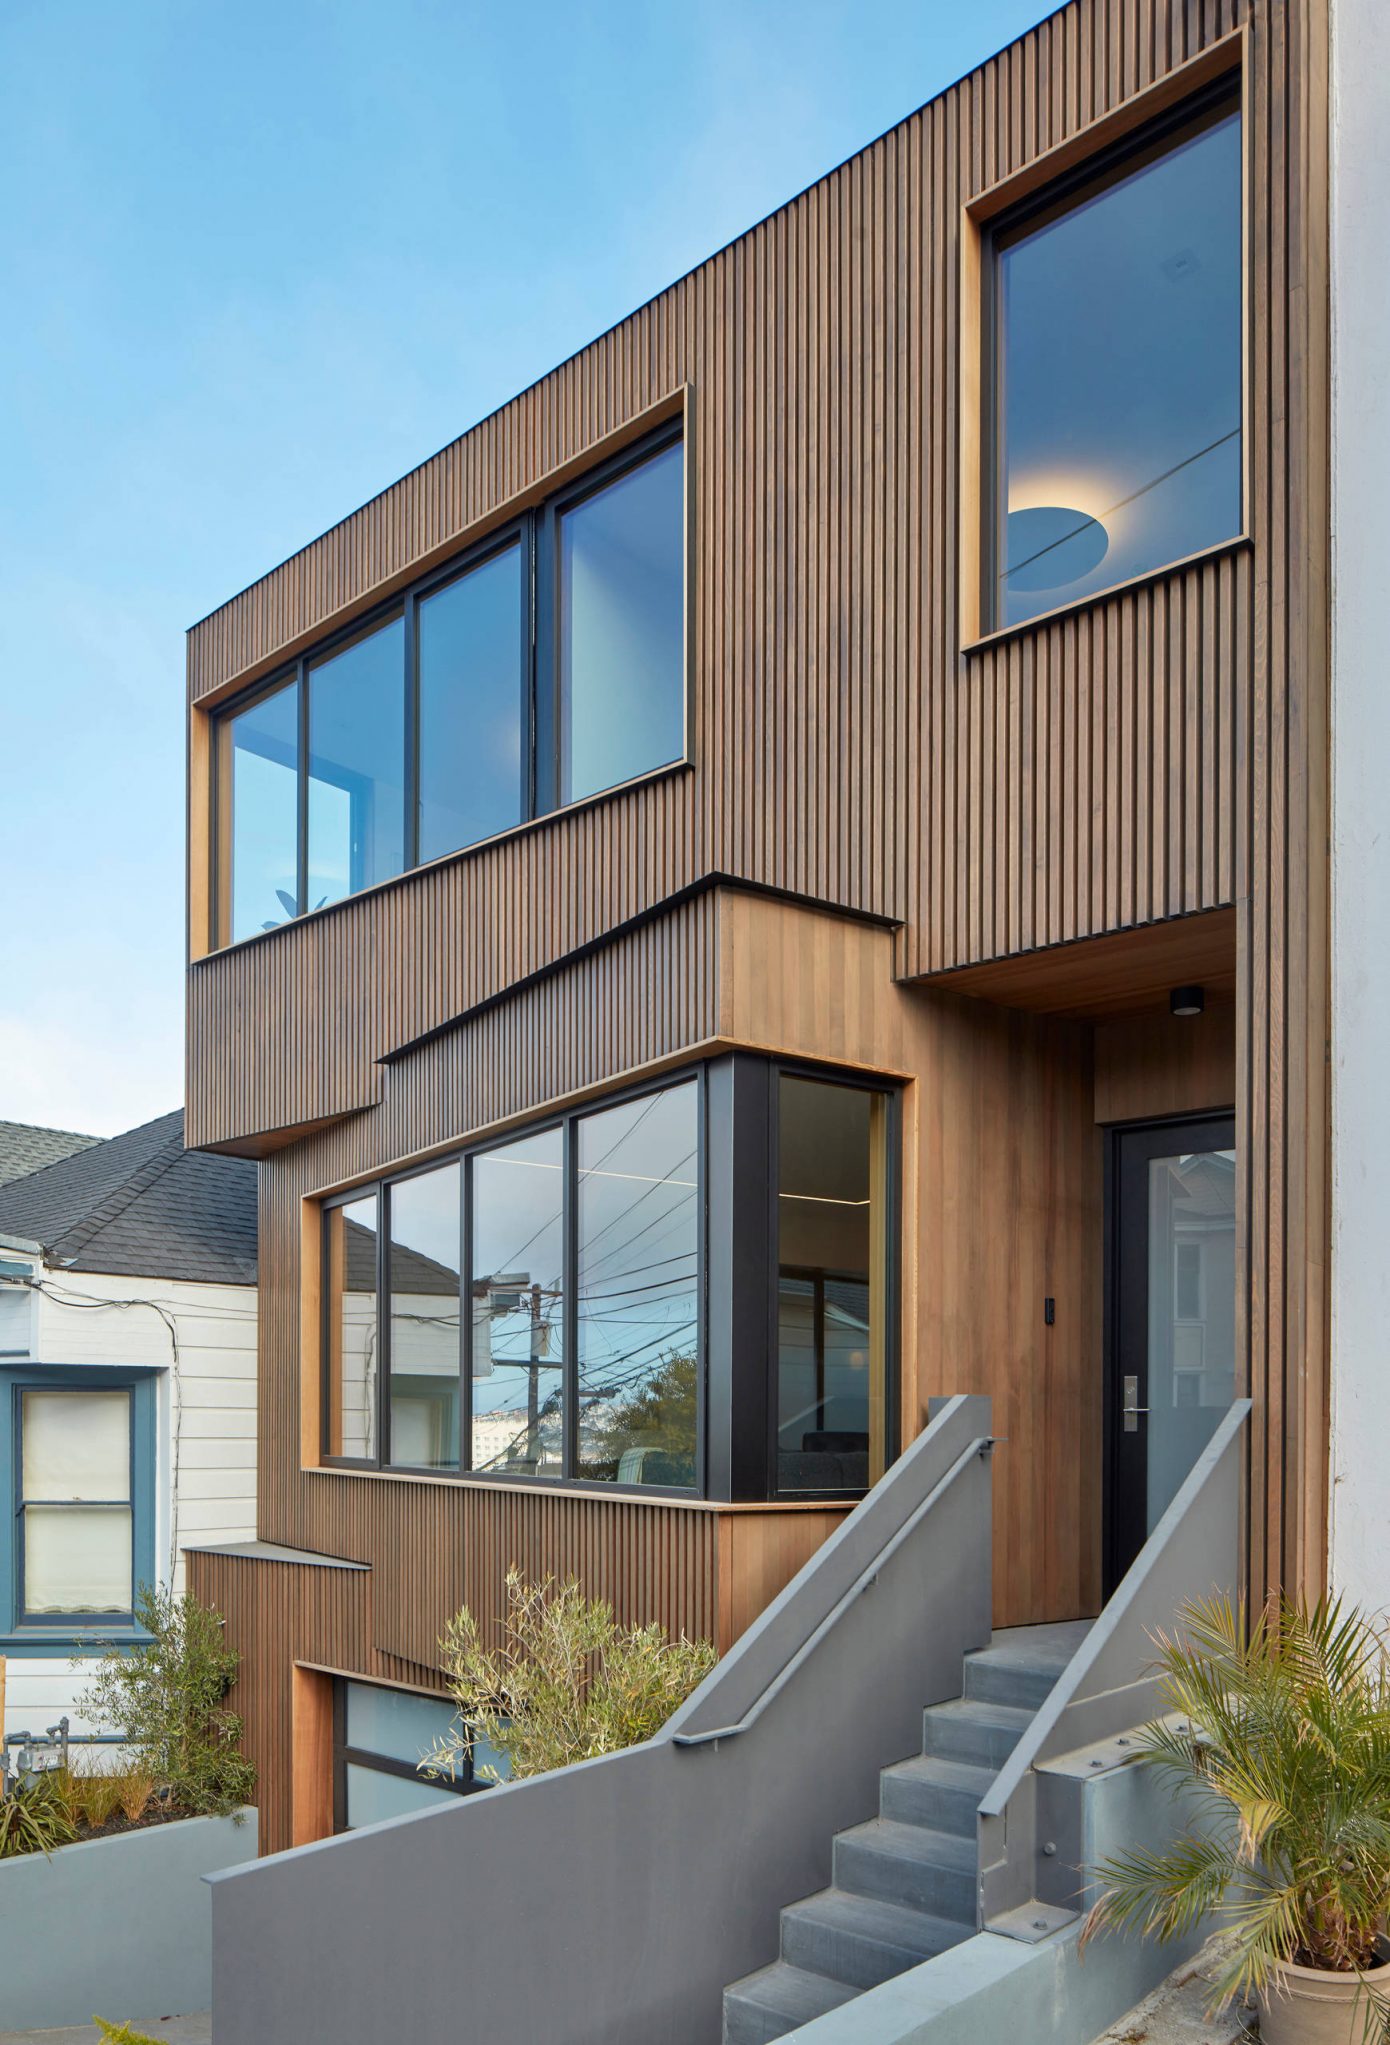 Noe Valley House by IwamotoScott Architecture